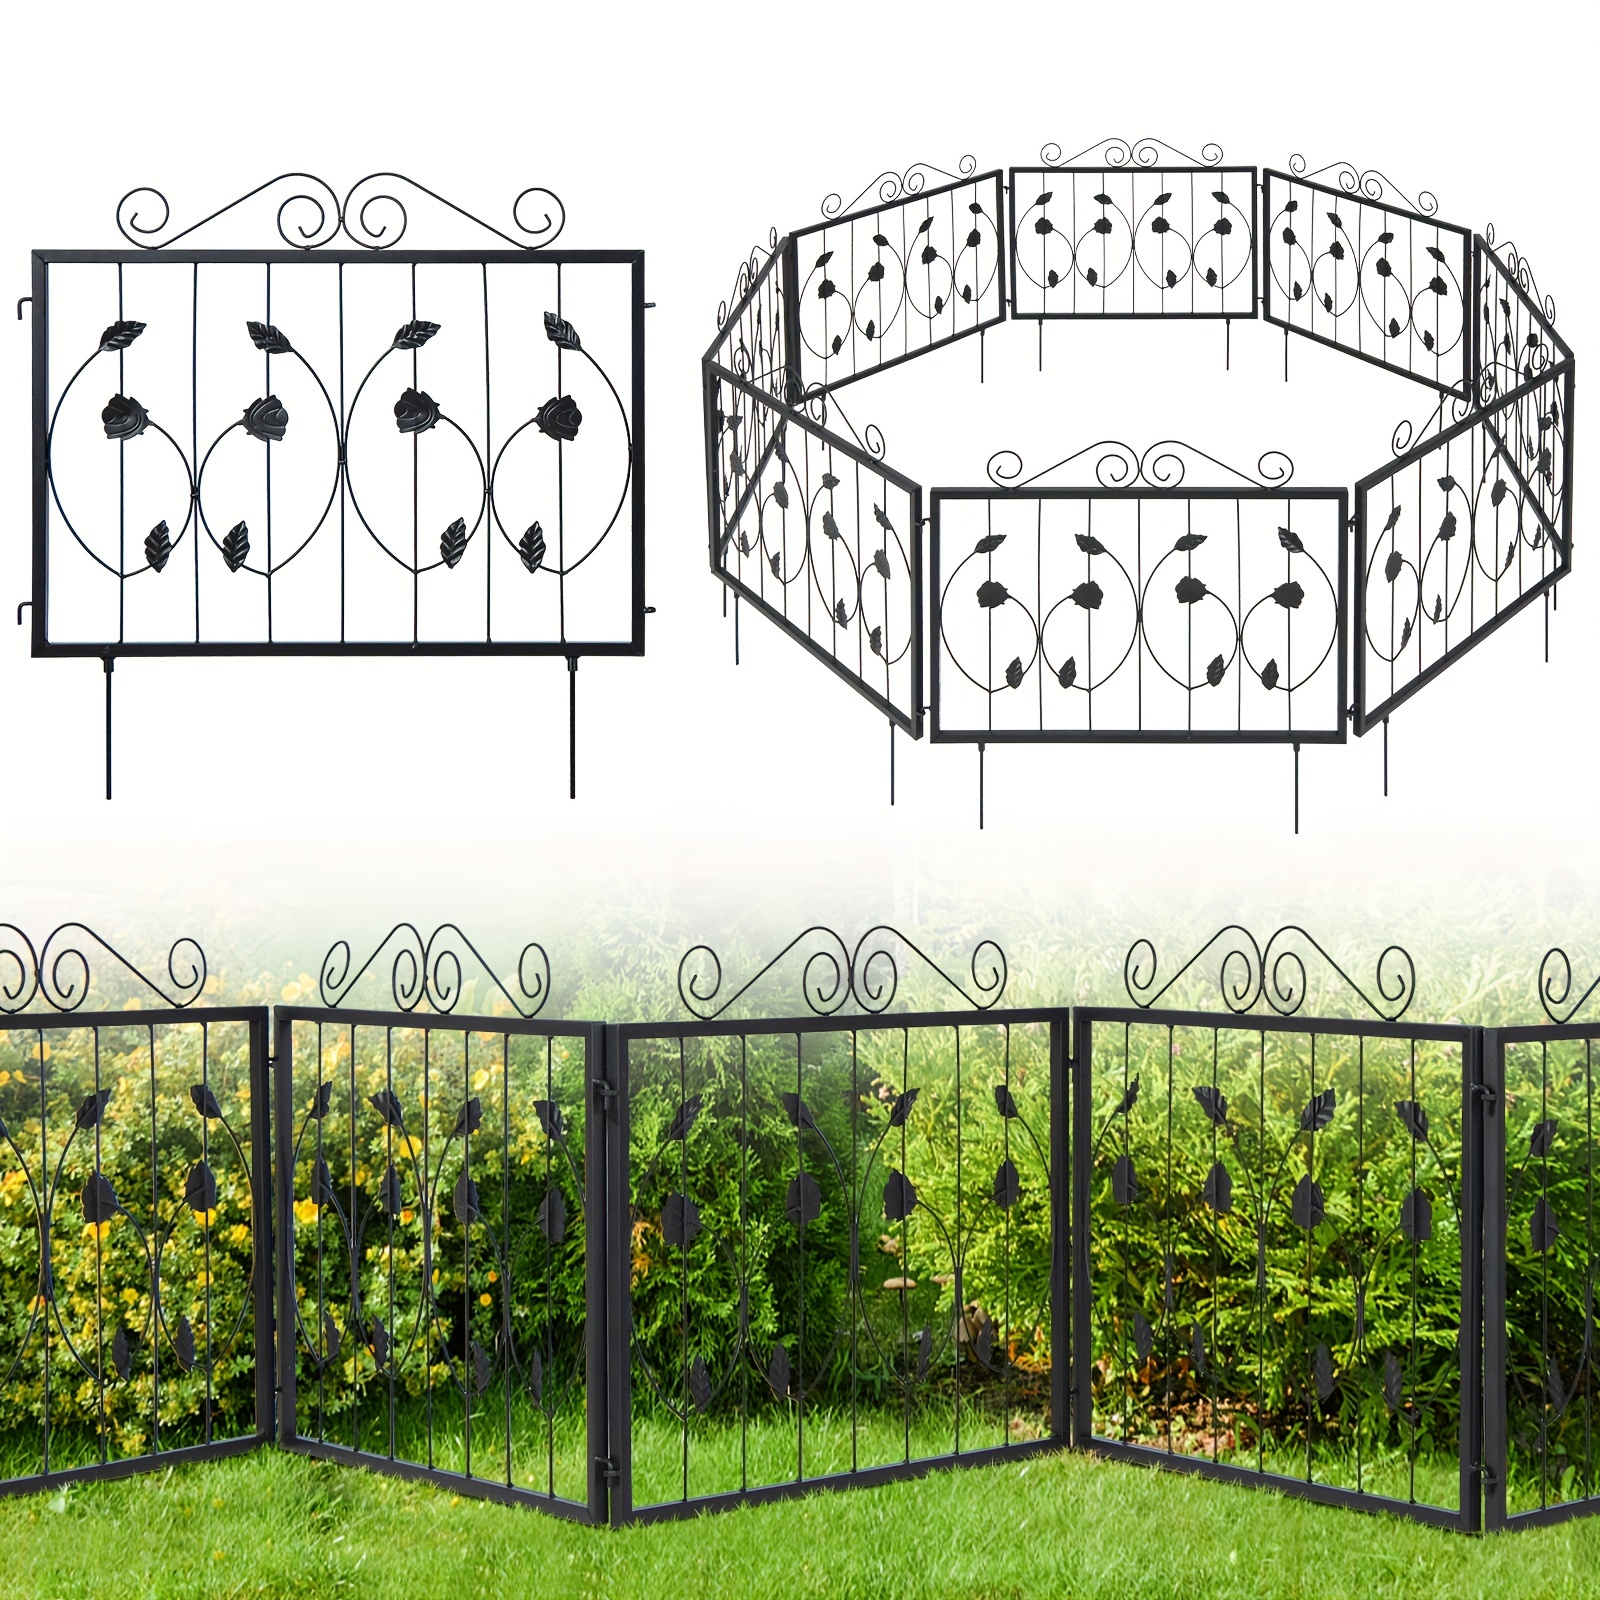 

Costway Decorative Garden Fence W/ 8 Panels Outdoor Animal Barrier Landscape Border